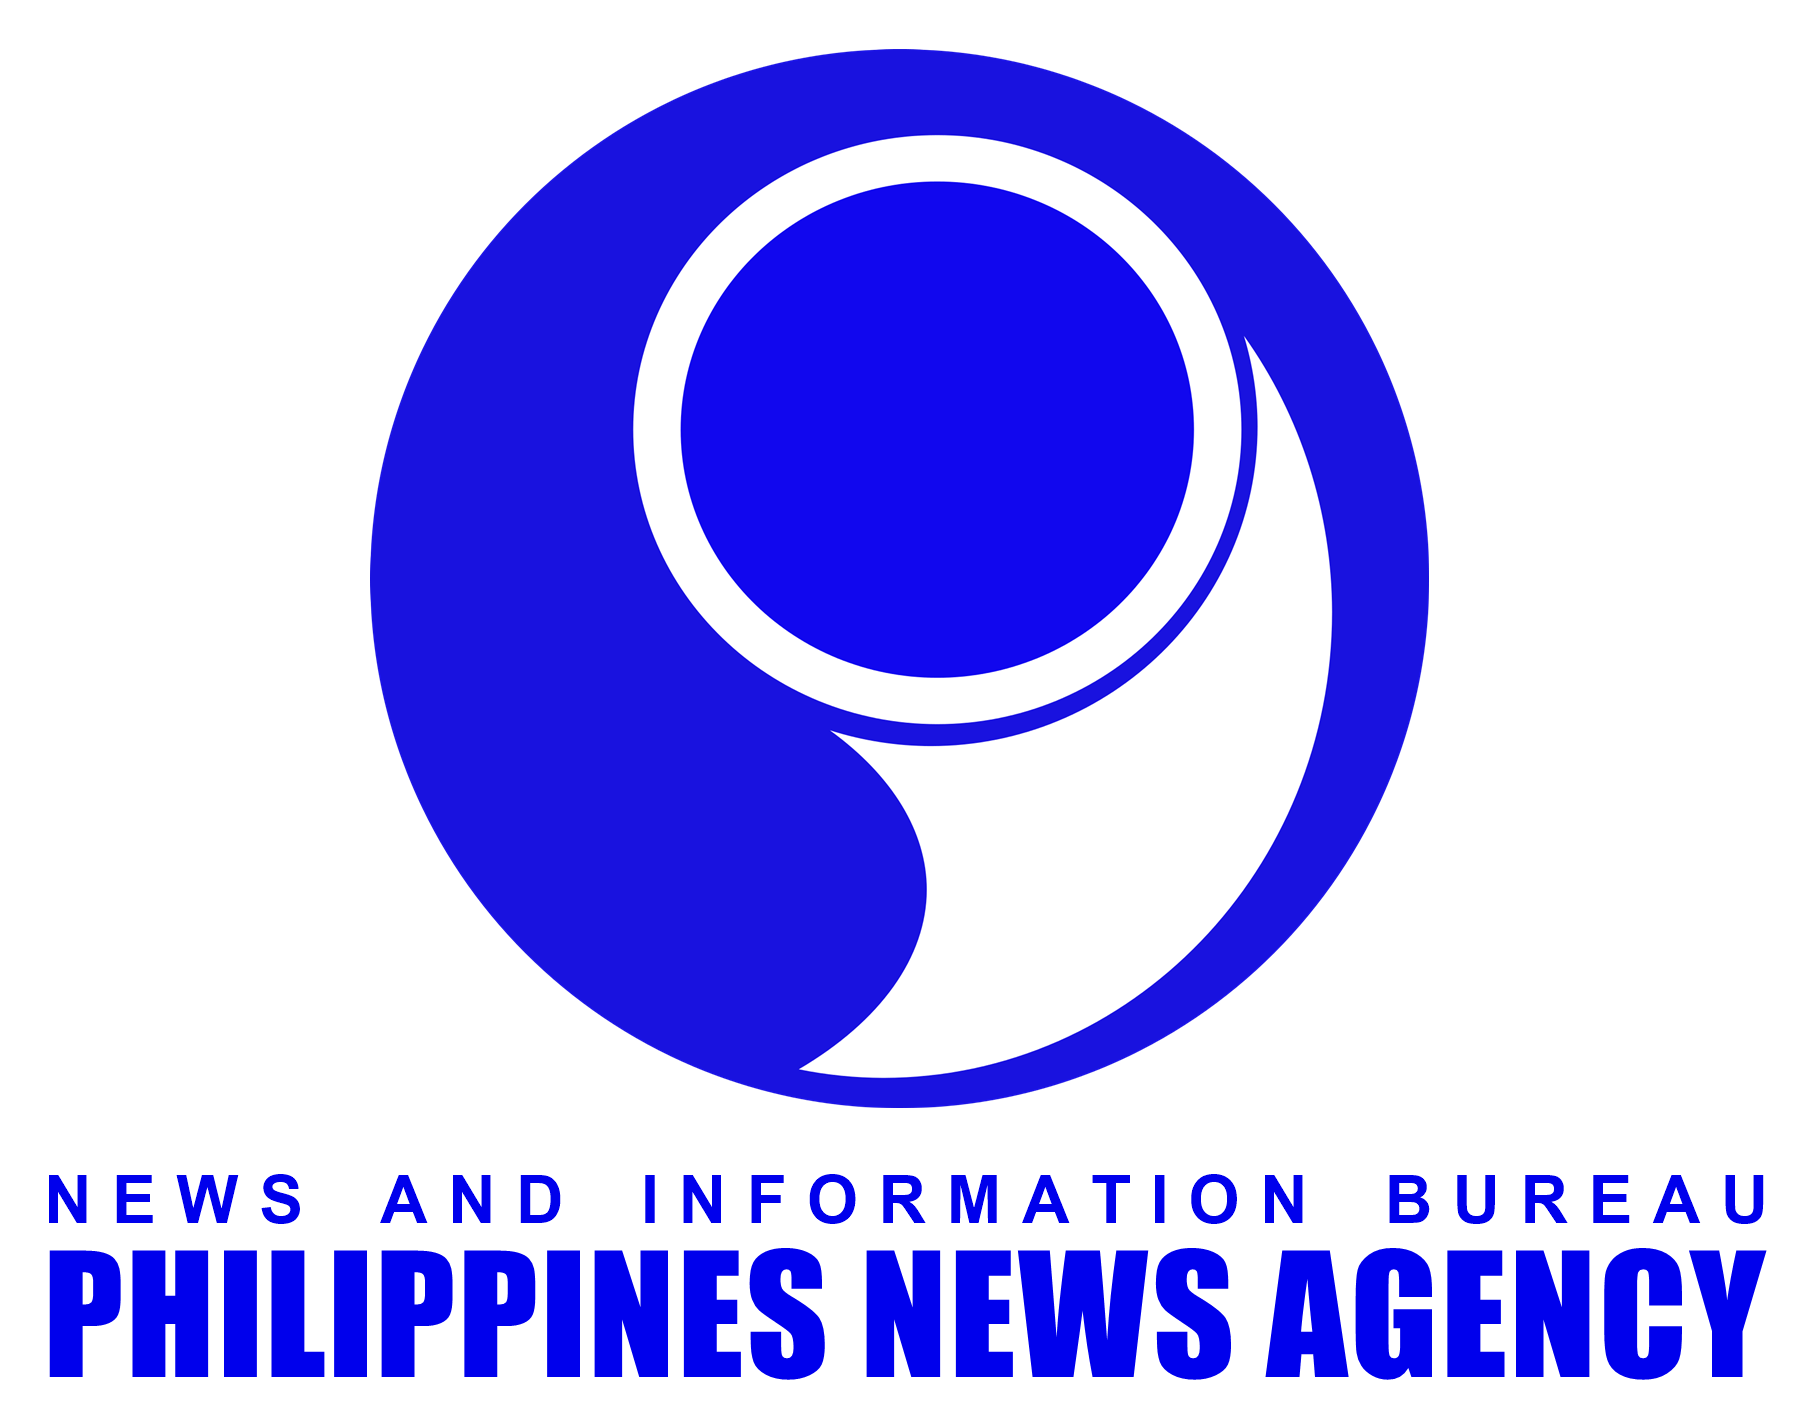 News Agency Logo - Image - PNA-PHILIPPINES-NEWS-AGENCY-LOGO.png | Logopedia | FANDOM ...